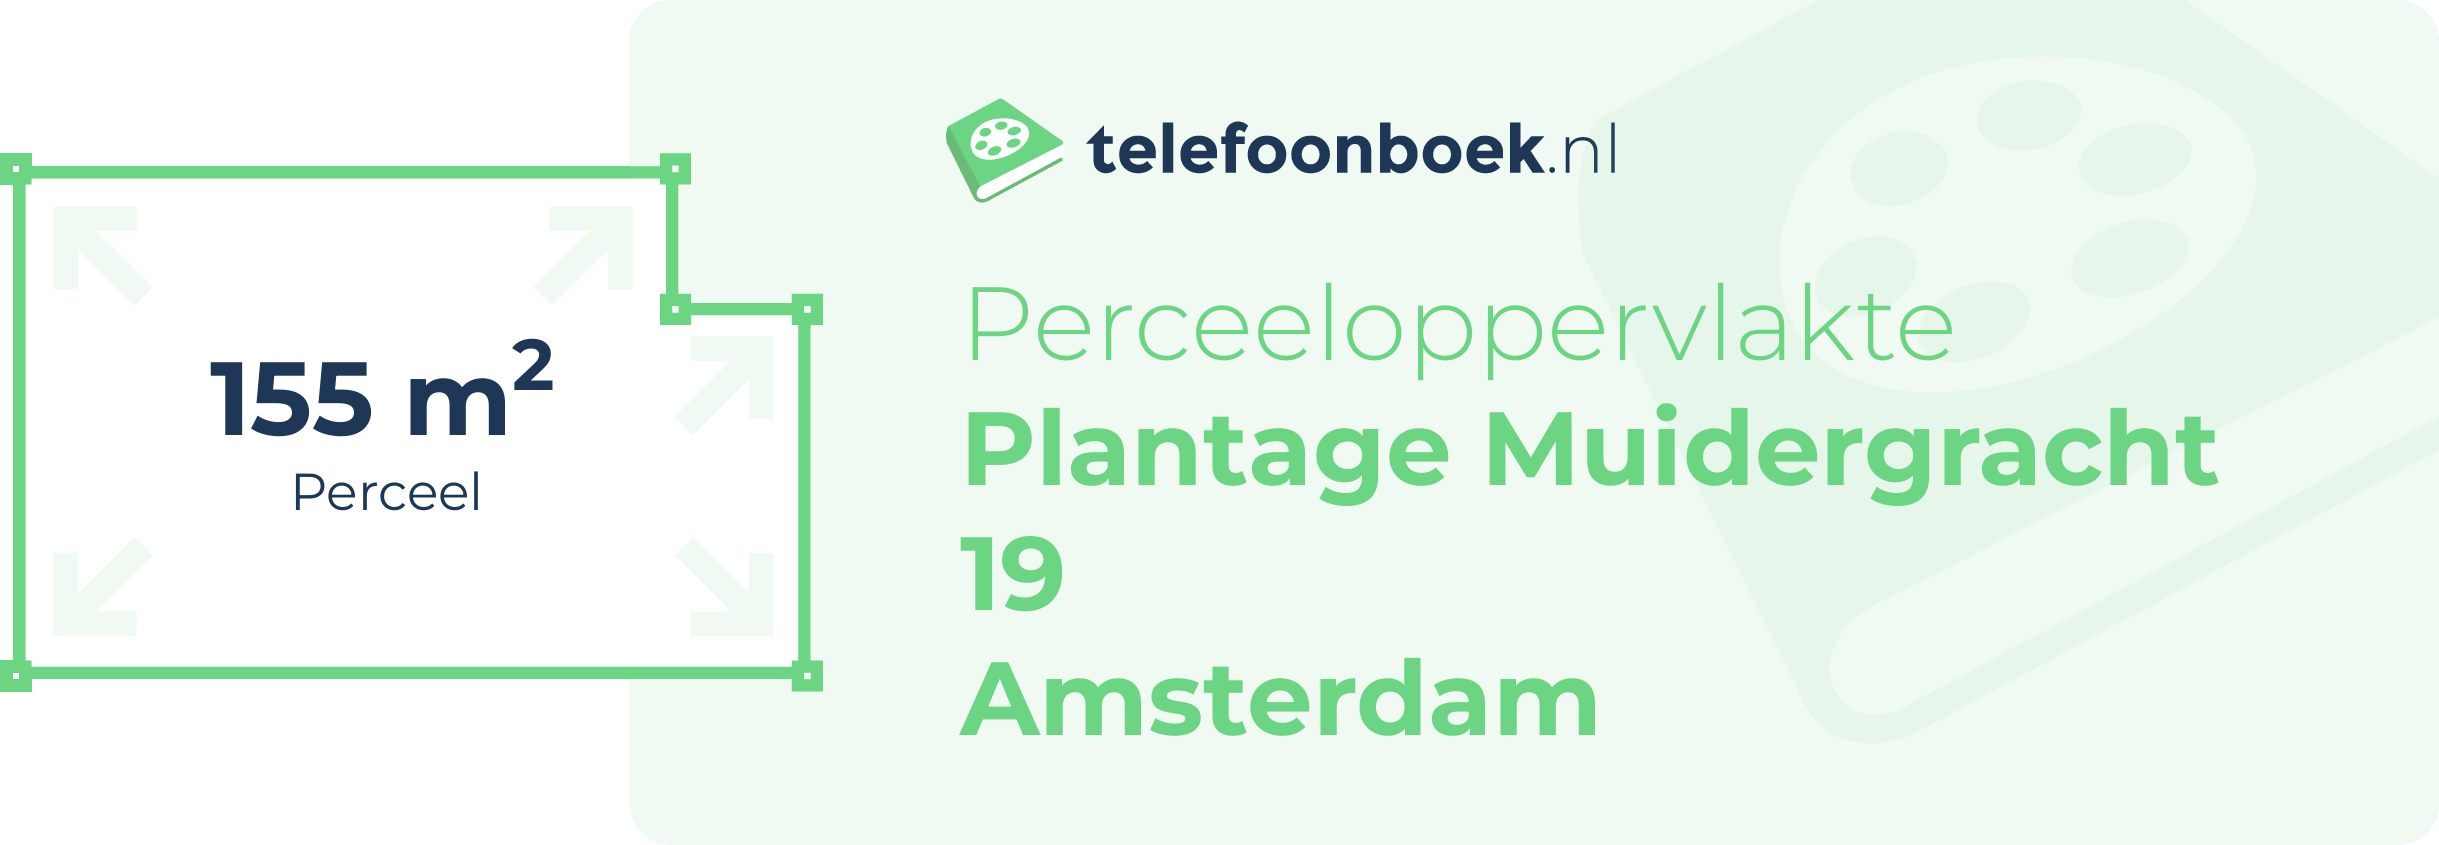 Perceeloppervlakte Plantage Muidergracht 19 Amsterdam